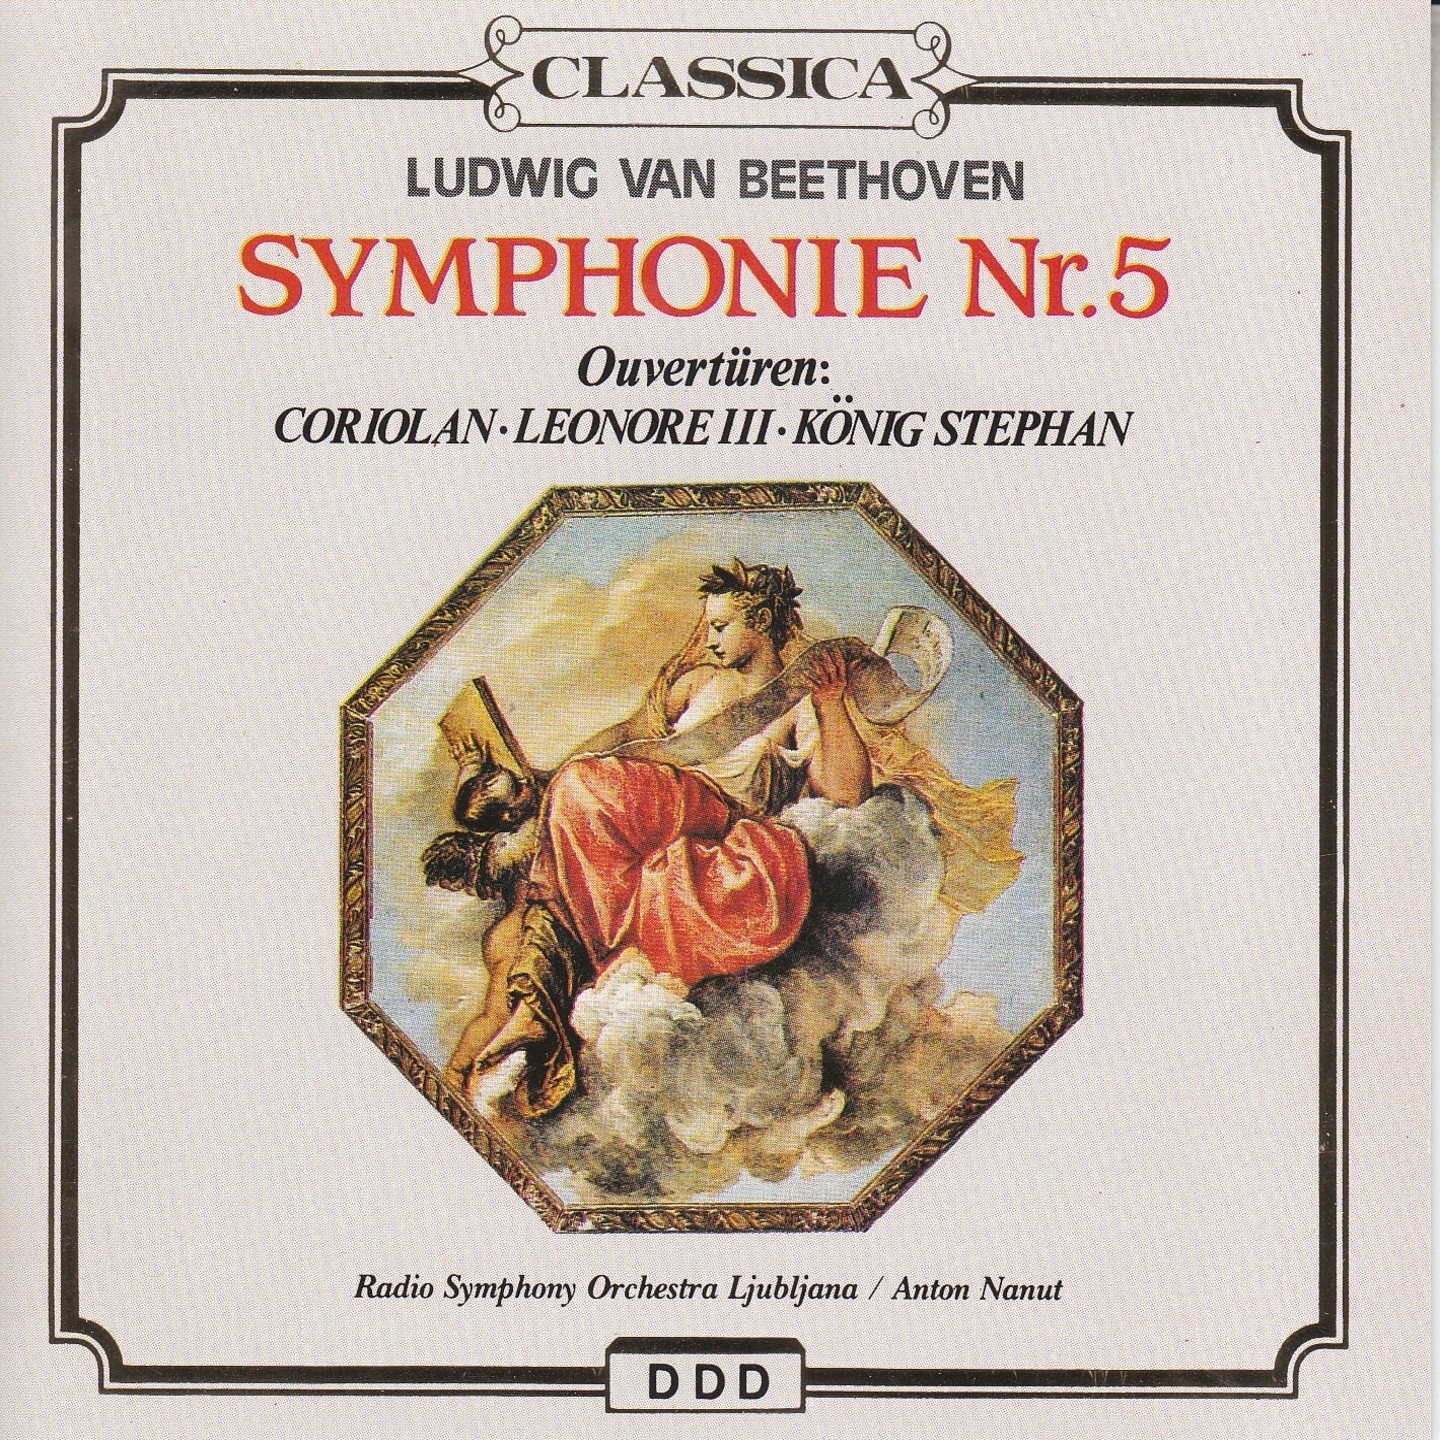 Beethoven: Symphony No. 5, Coriolan, Leonora Overture No. 3 & King Stephan Overture